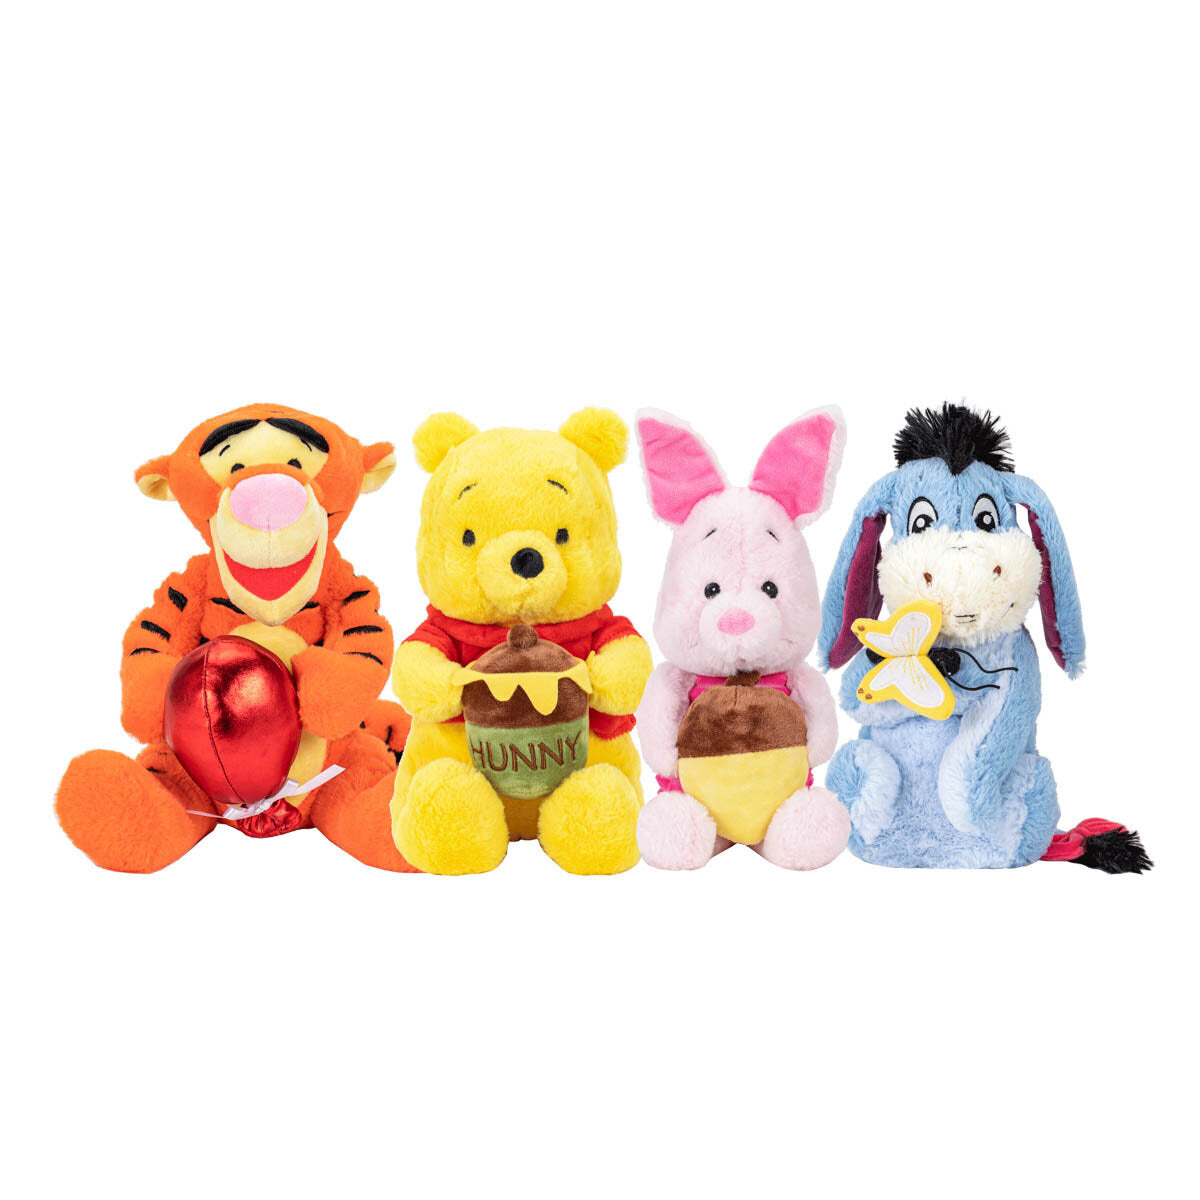 Winnie the Pooh and Friends 4-Piece Figure Set